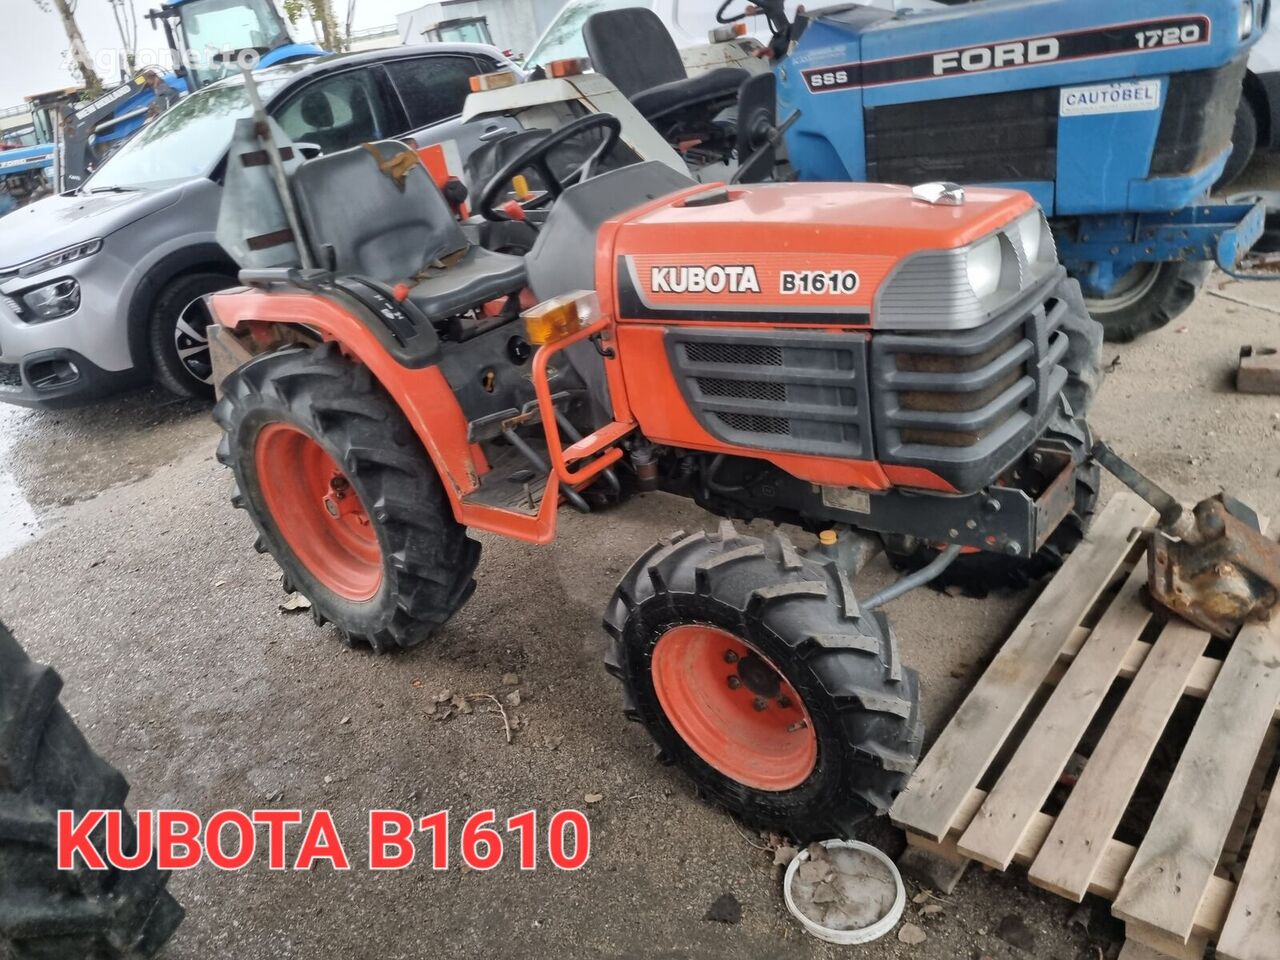 Kubota B1610 traktor på hjul